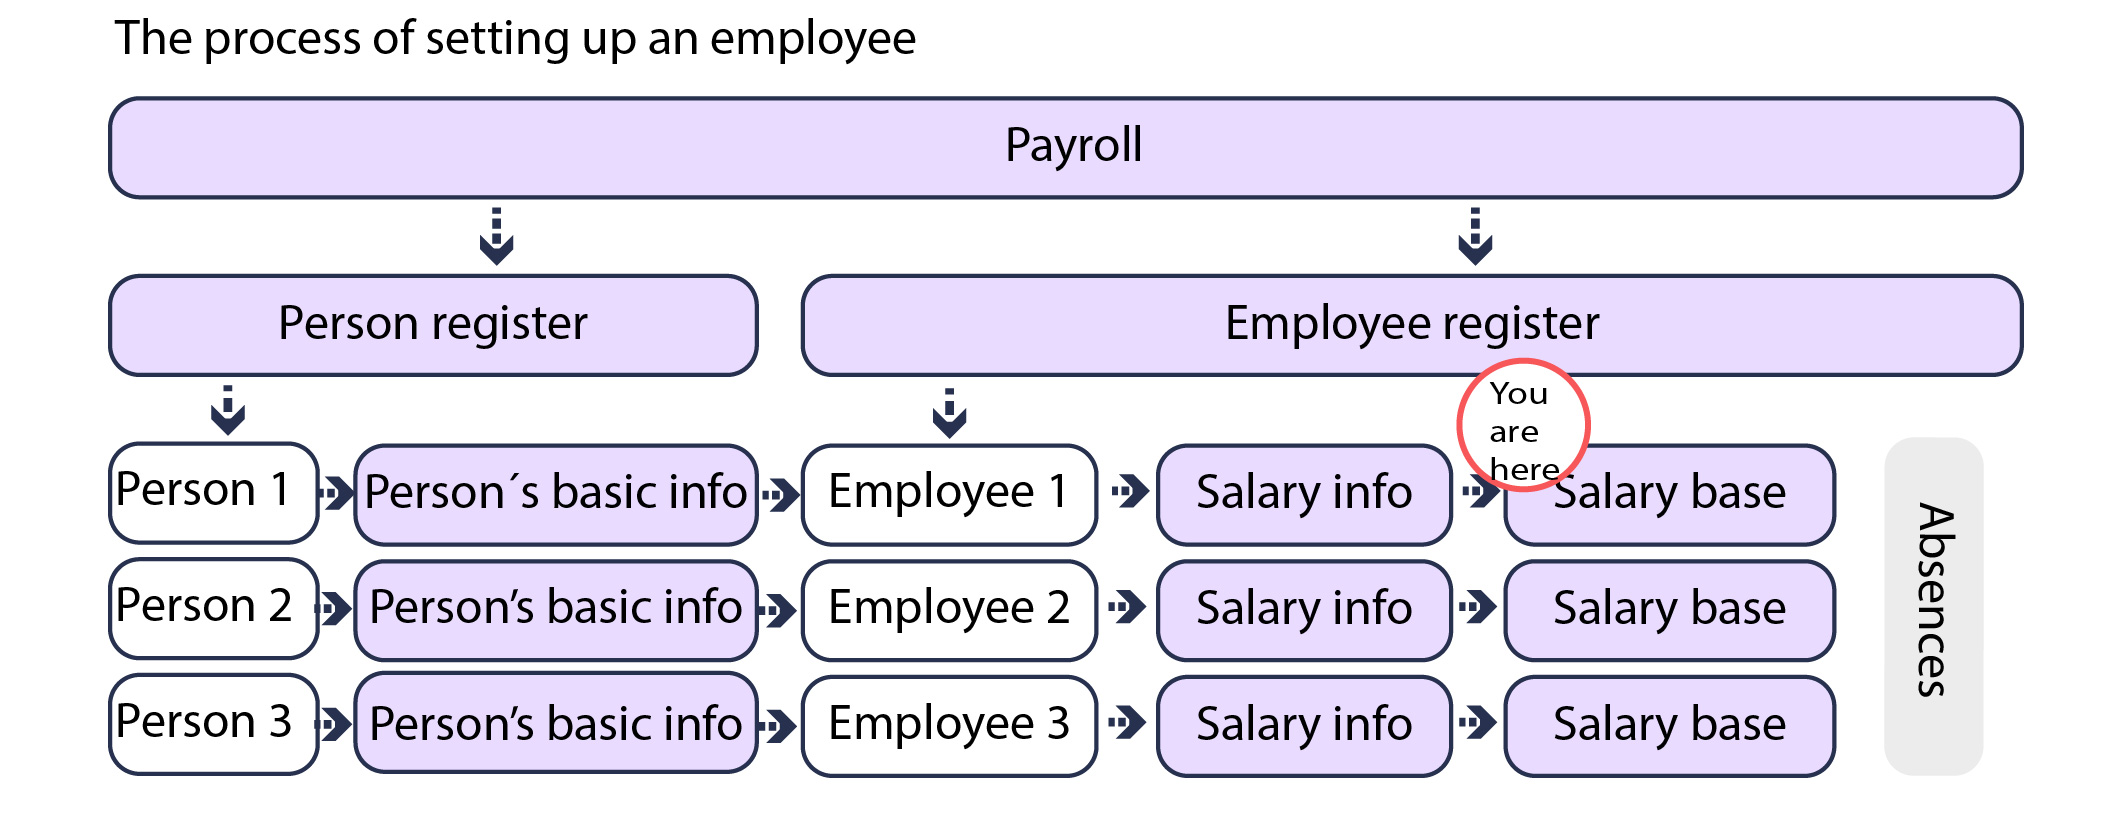 palkkaperuste_the_process_of_setting_up_an_employee_en.jpg